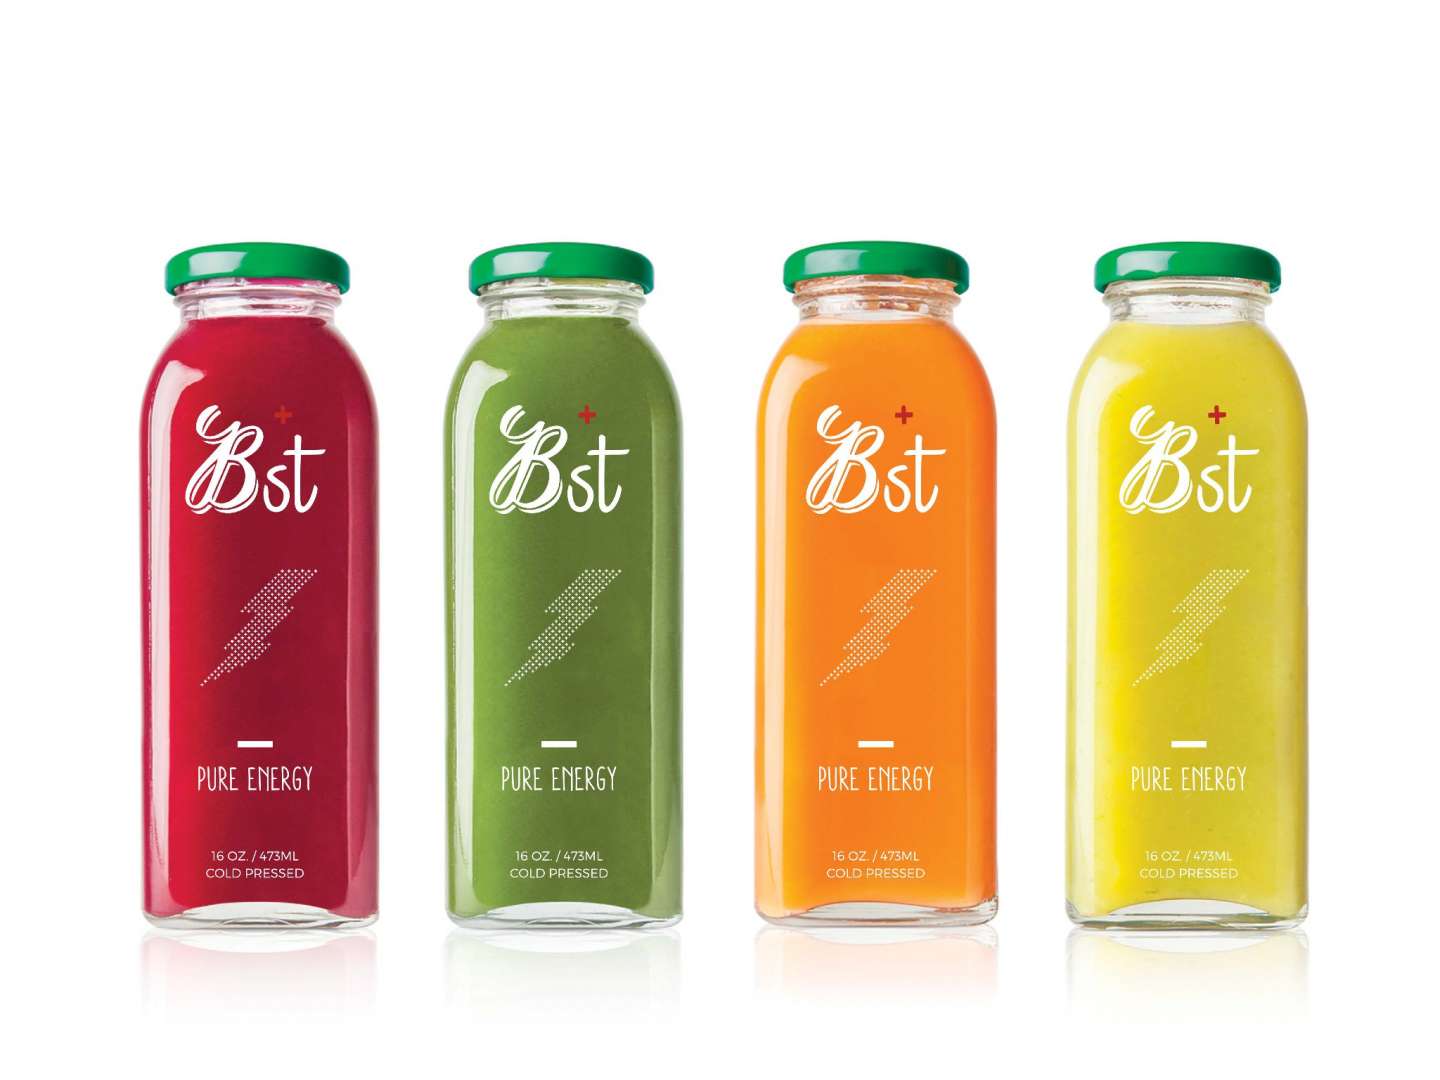 Bst Cold Pressed Juice Branding